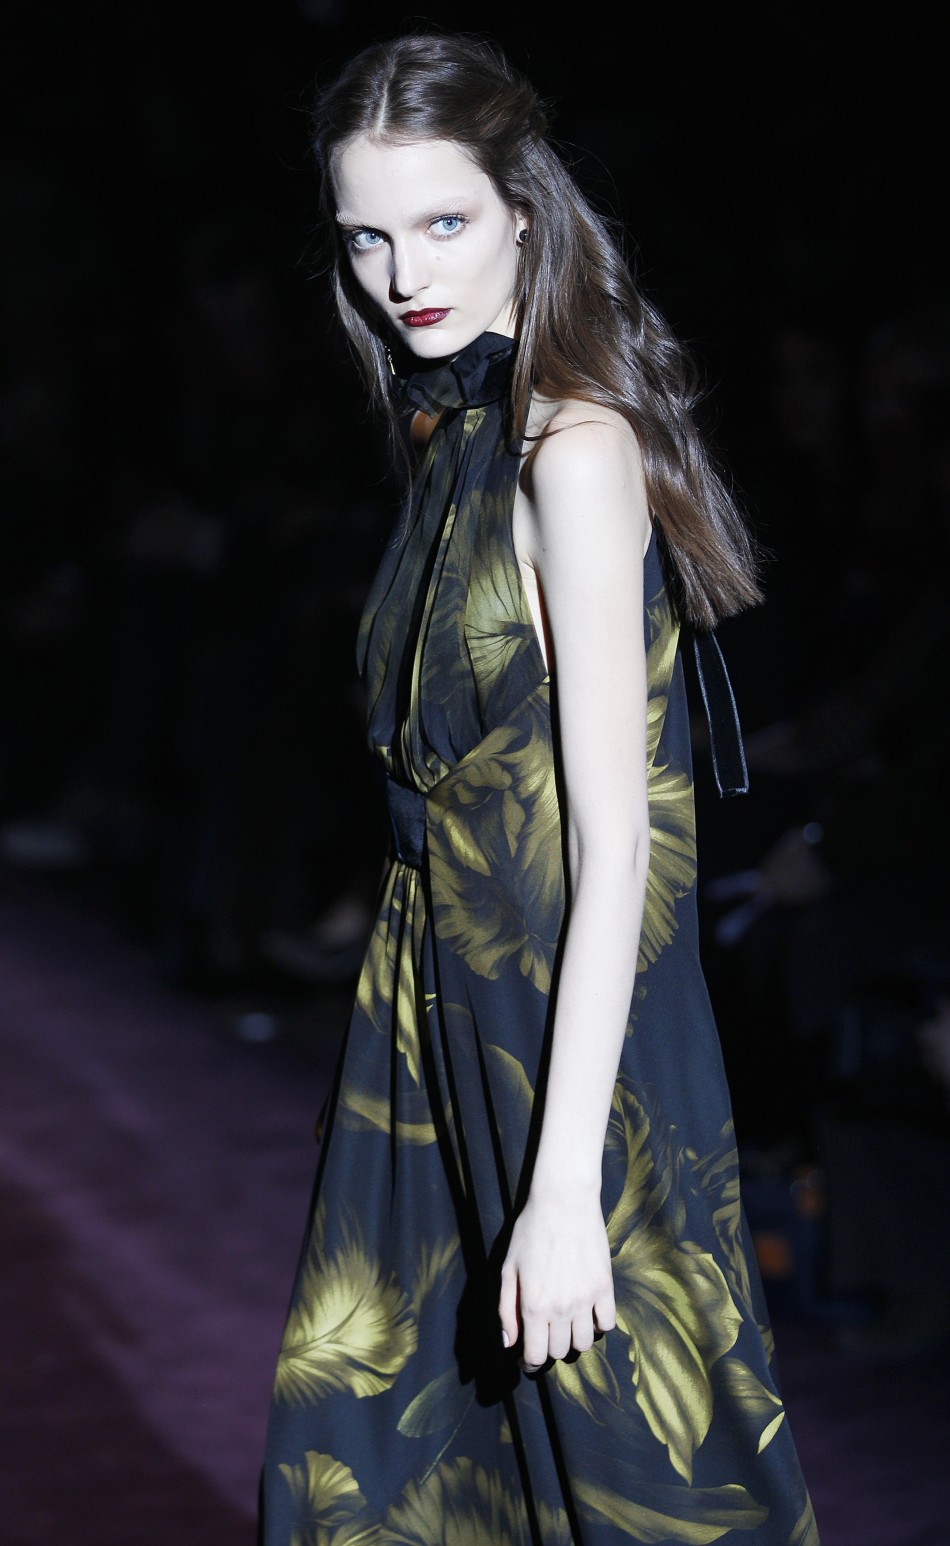 Gucci Kicks Off 2012 Milan Fashion Week with Dramatic Dark Romance Line-up